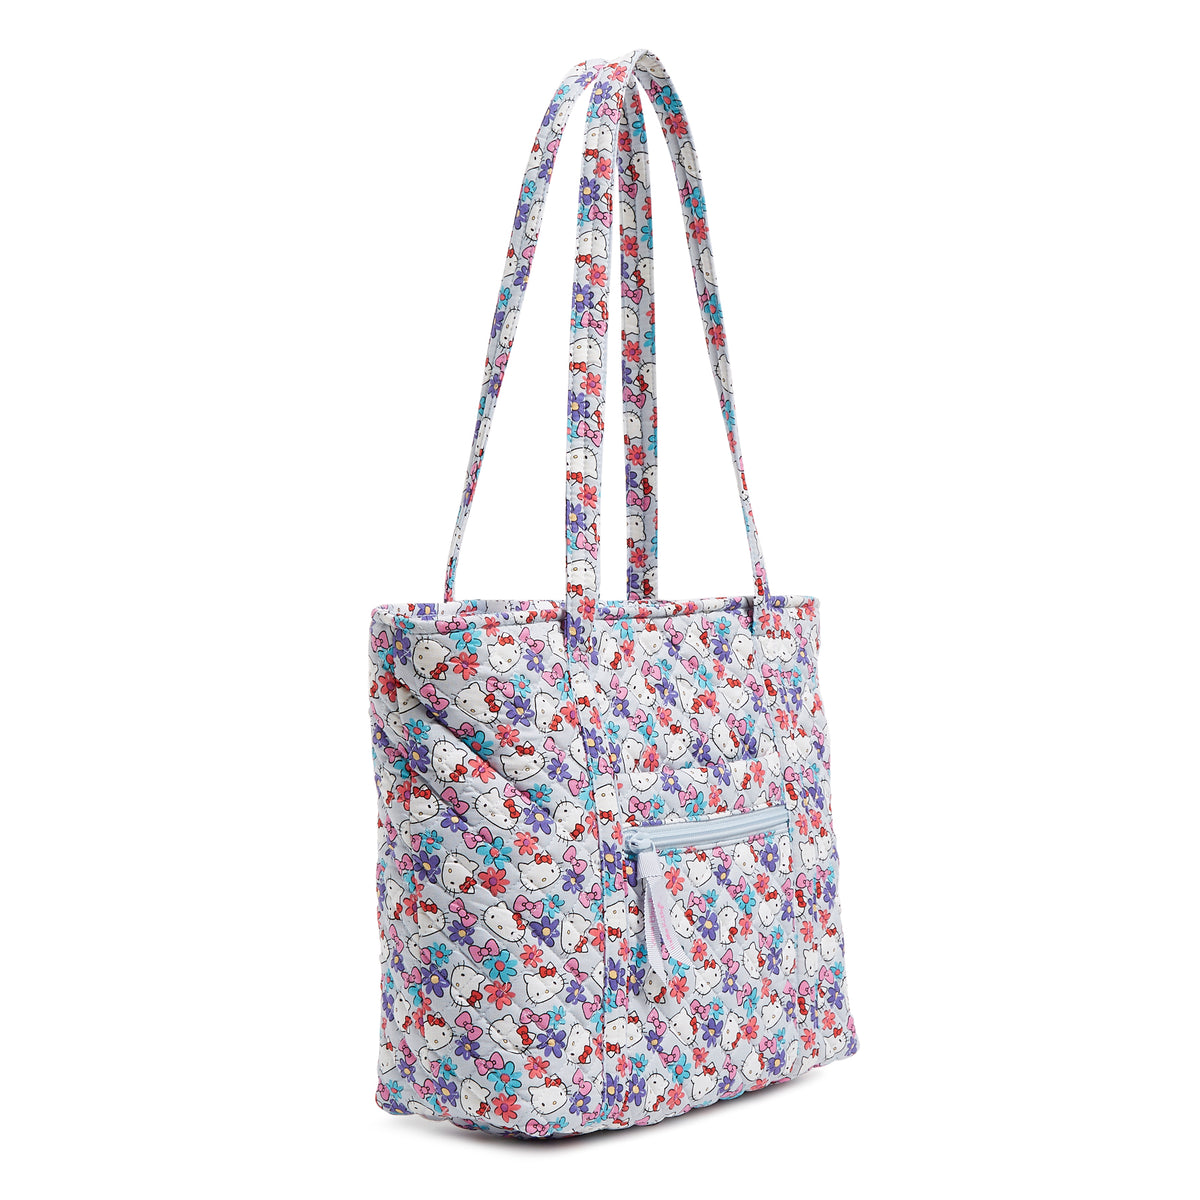 Hello Kitty x Vera Bradley Small Tote Bag (Bow Print) Bags Vera Bradley Designs Inc   